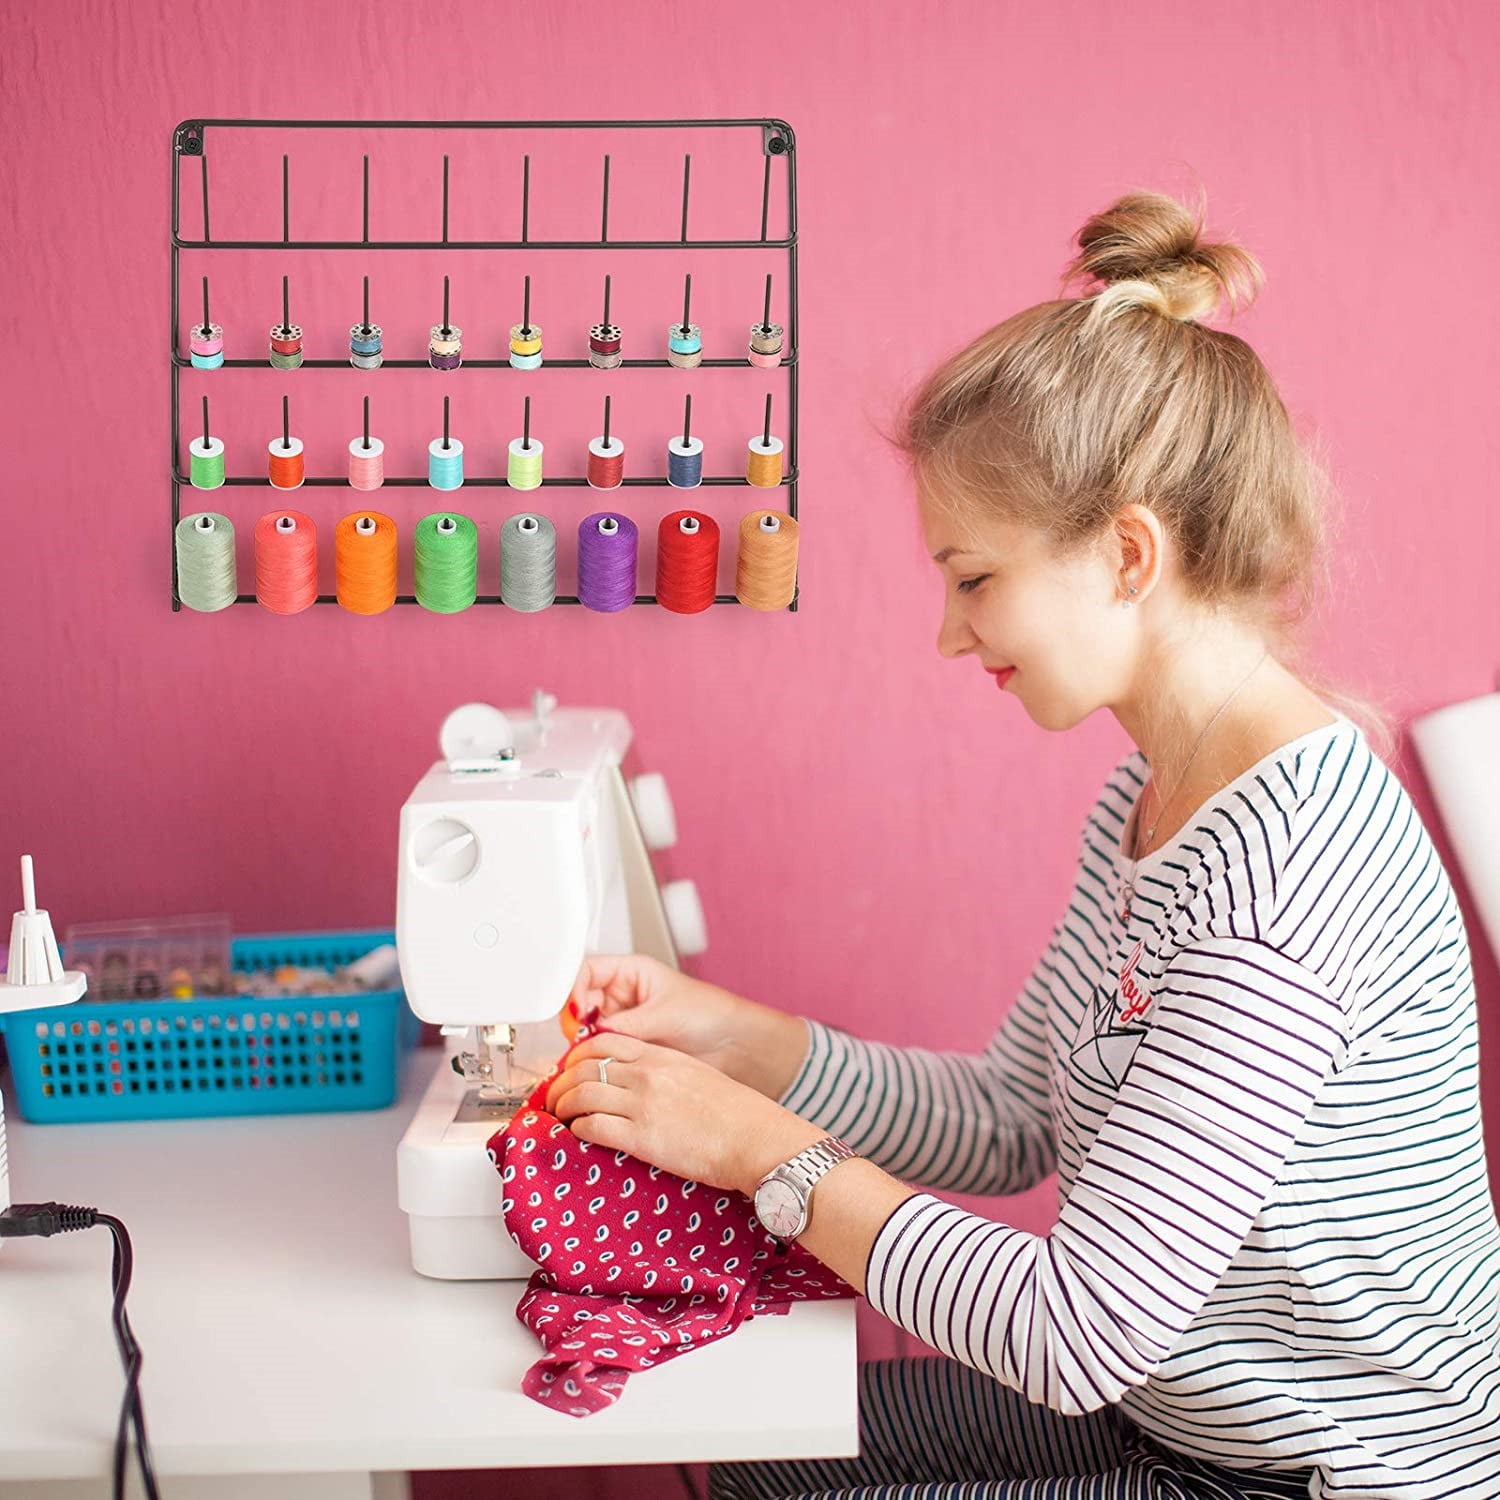 32-Spool Sewing Thread Rack, Wall-Mounted Sewing Thead Holder, Iron  Organizer Shelf for Mini Sewing